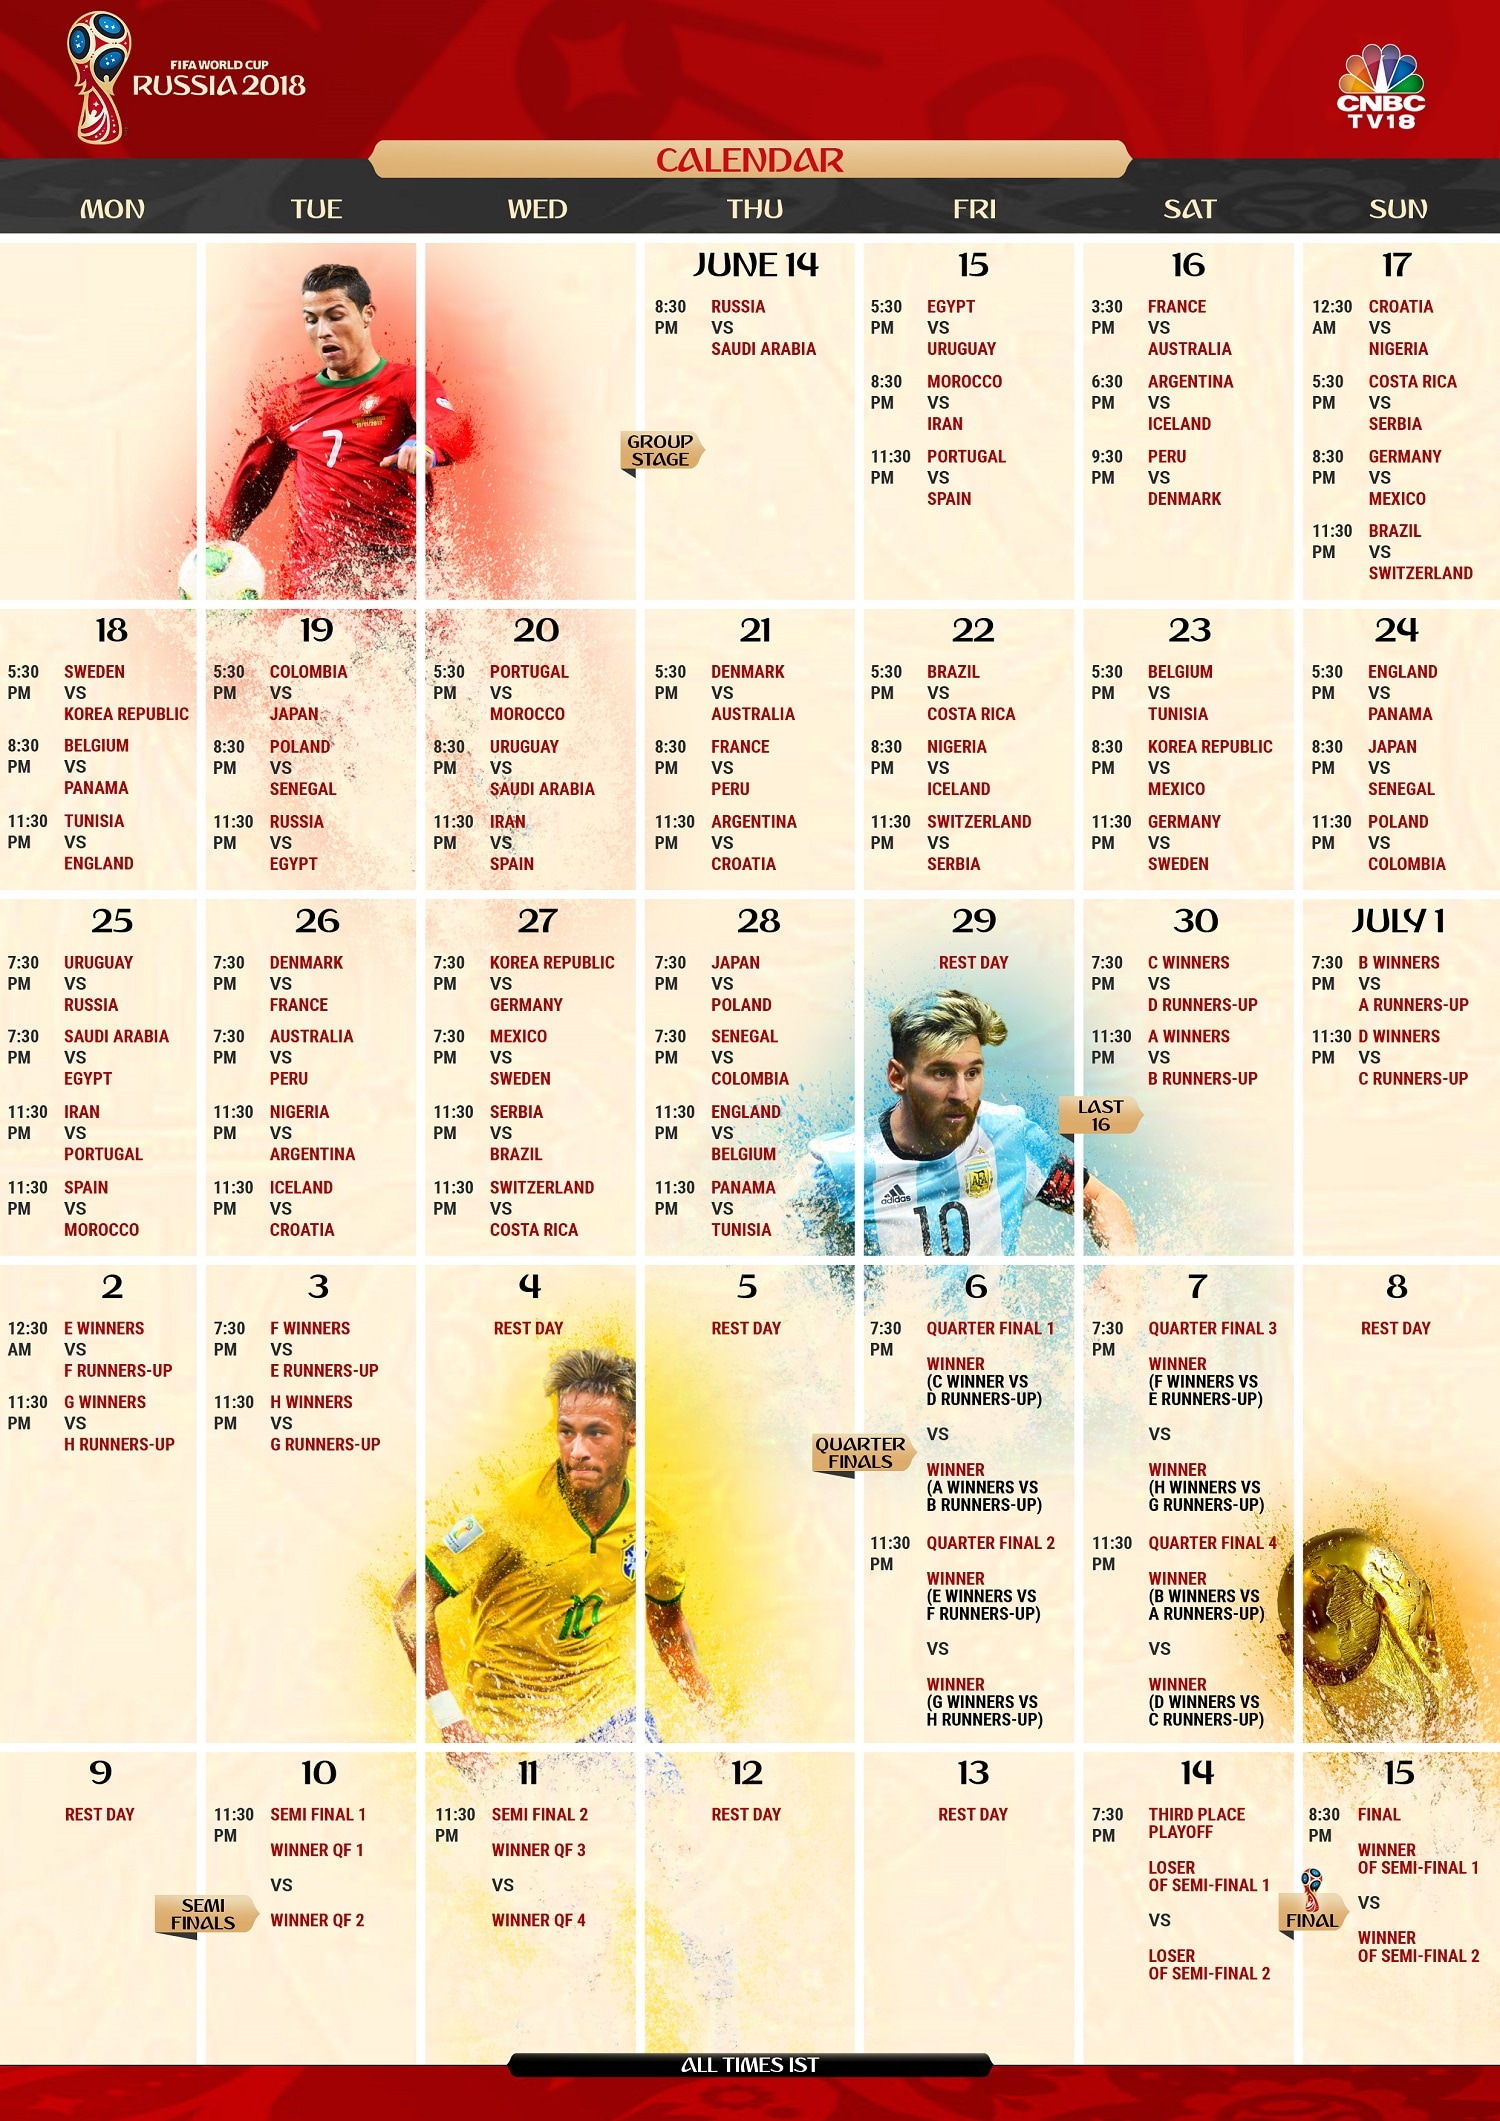 Print your Fifa World Cup 2018 calendar